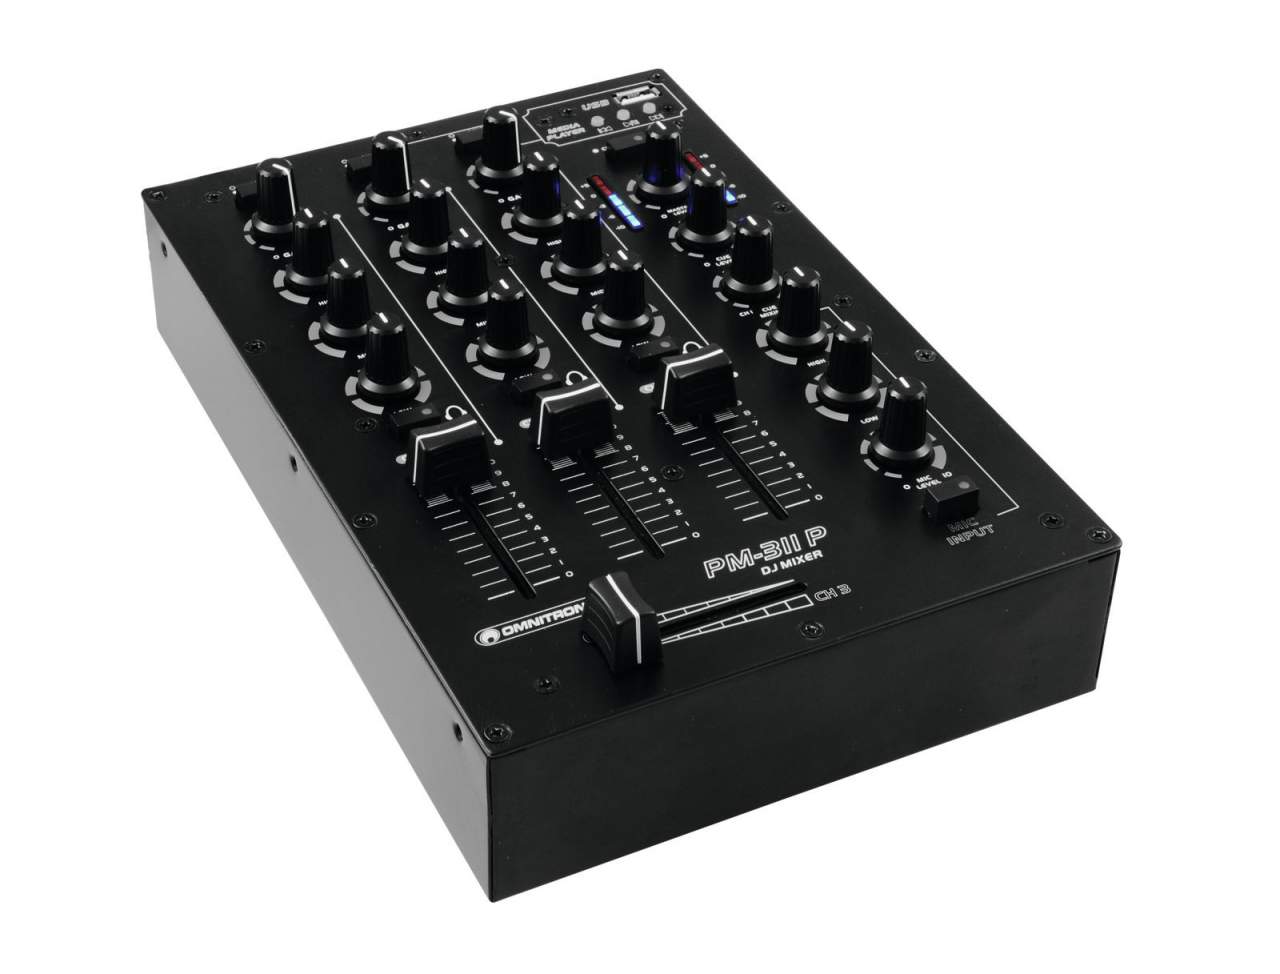 OMNITRONIC PM-311P DJ-Mixer mit Player unter OMNITRONIC